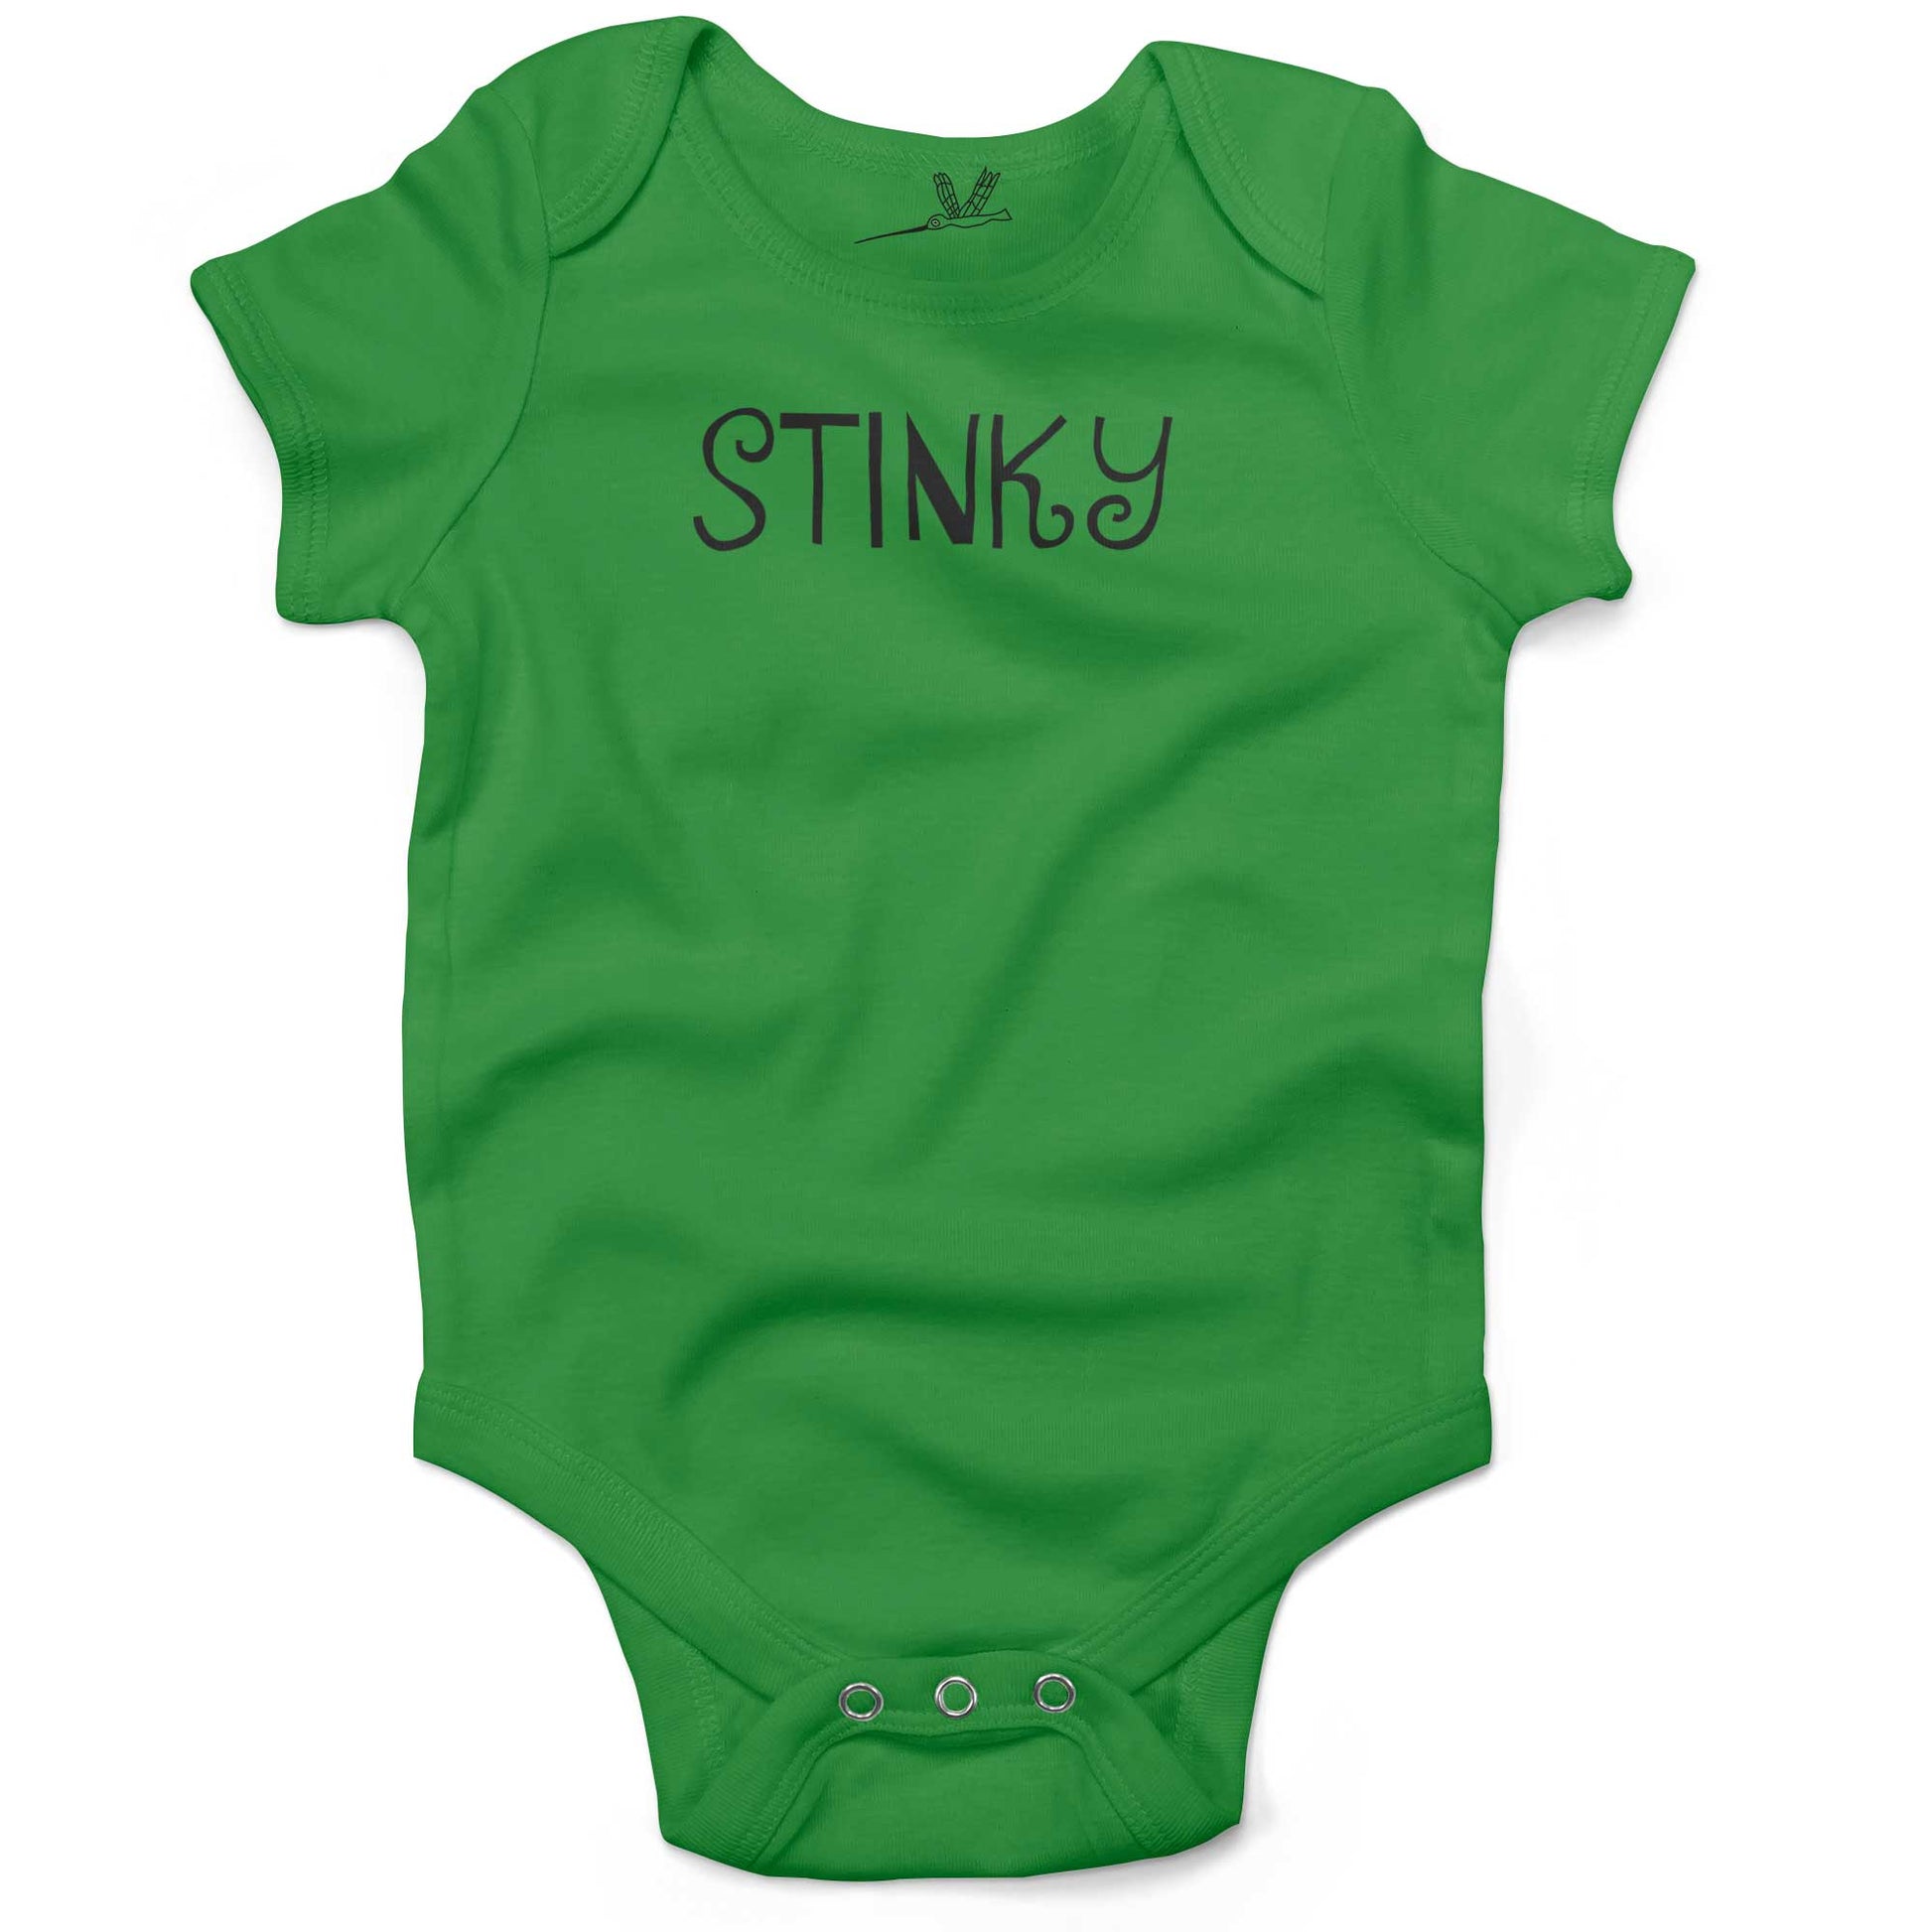 Stinky Infant Bodysuit or Raglan Baby Tee-Grass Green-3-6 months